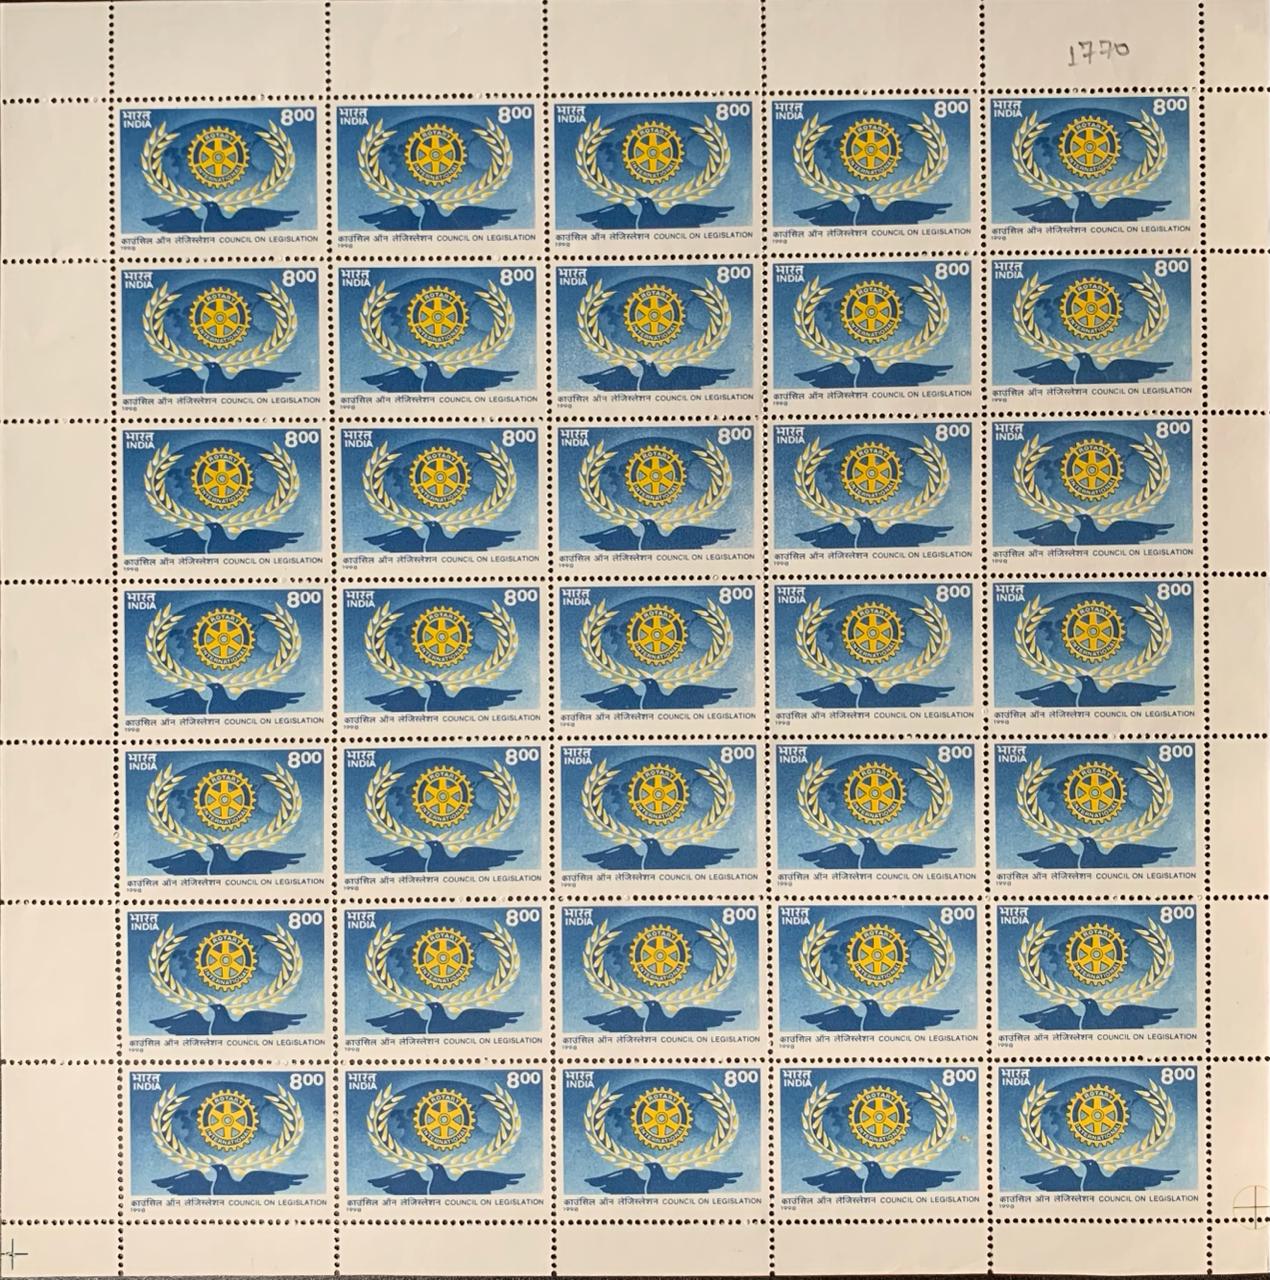 India 1998 Rotary International Emblem Full Sheet